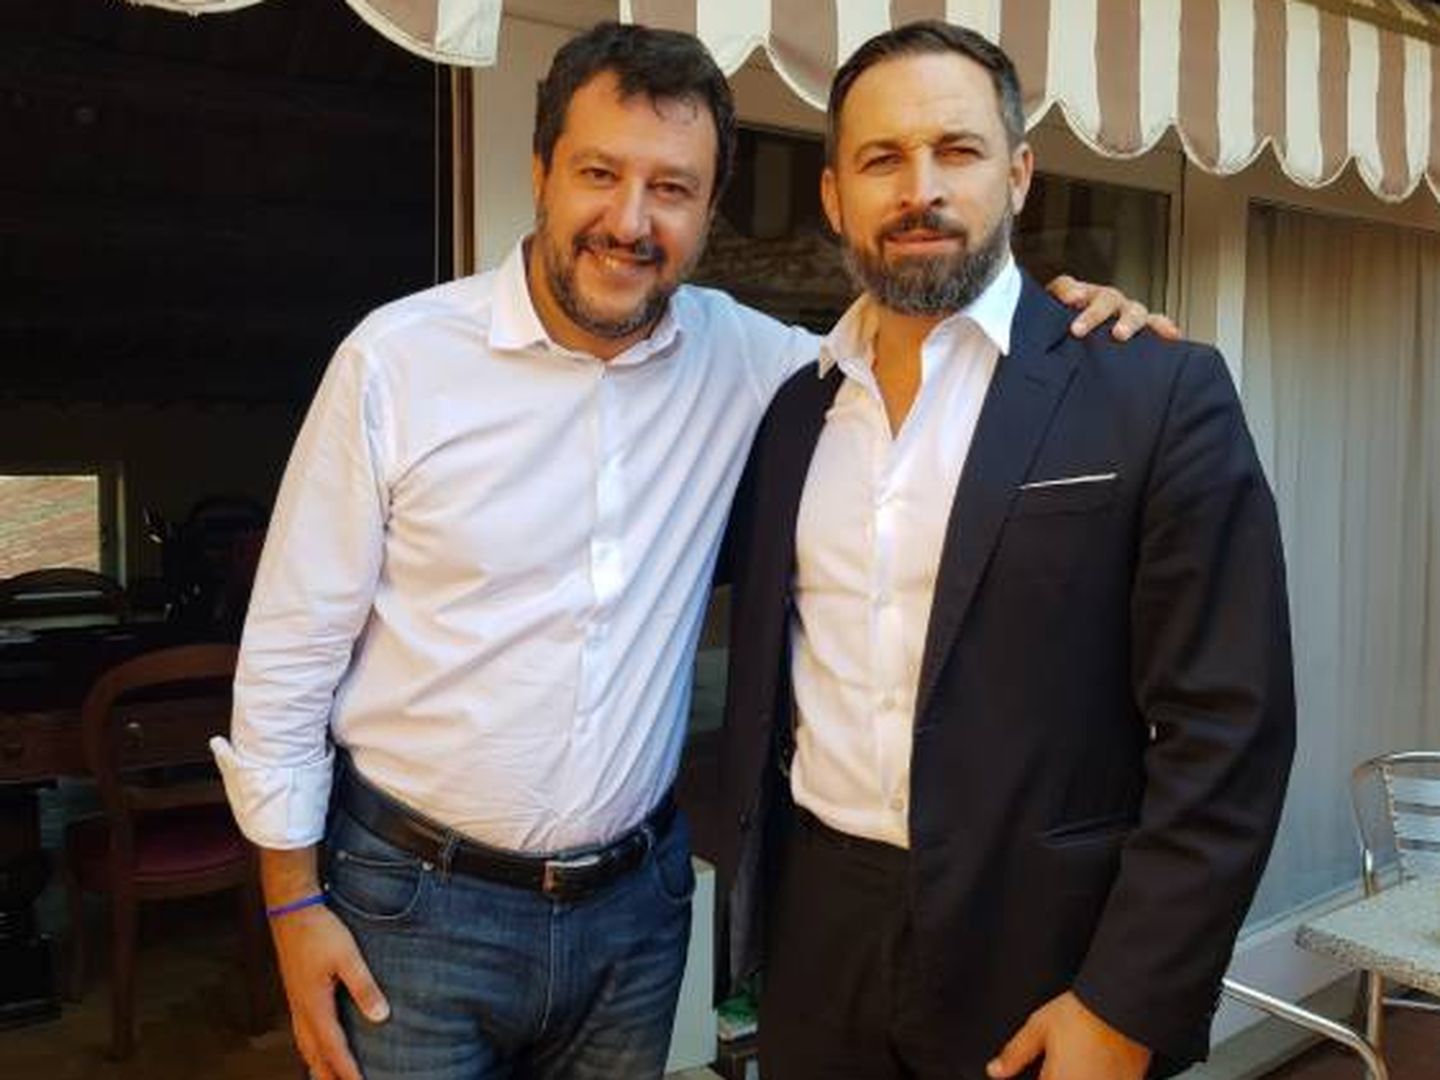 Matteo Salvini y Santiago Abascal. (Twitter)